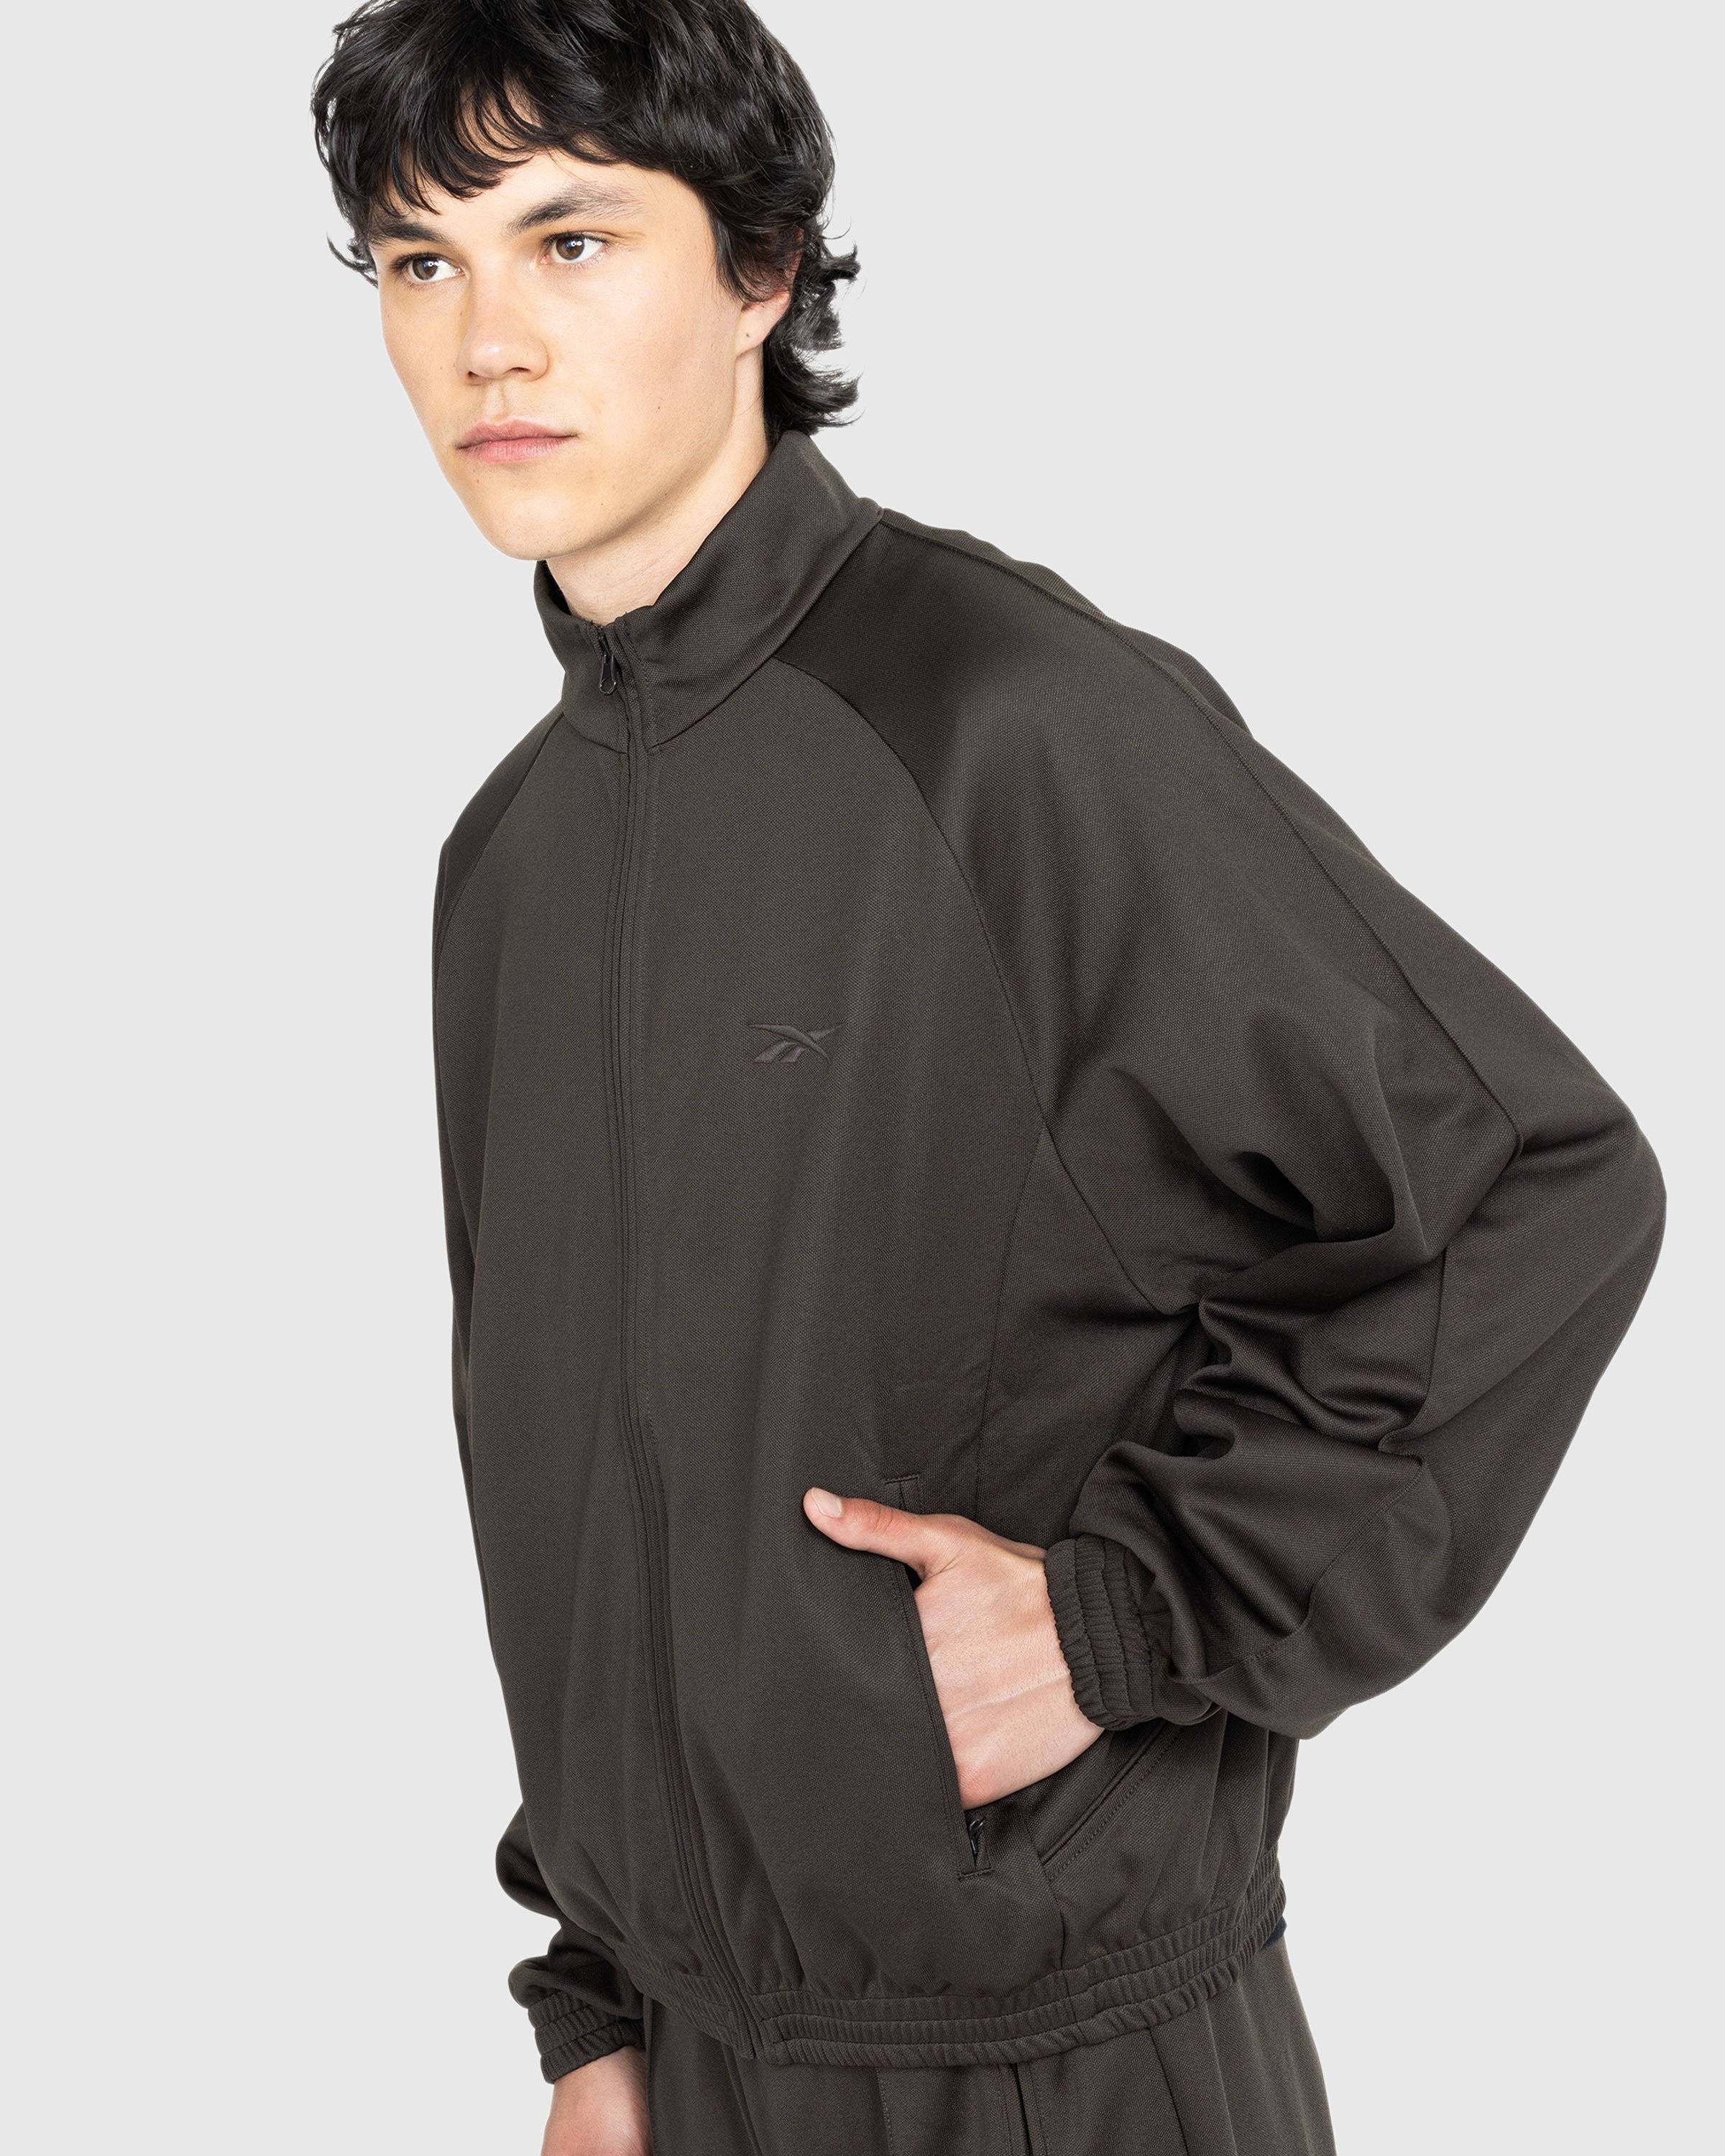 Reebok - Piped Track Jacket Moro - Clothing - Brown - Image 4